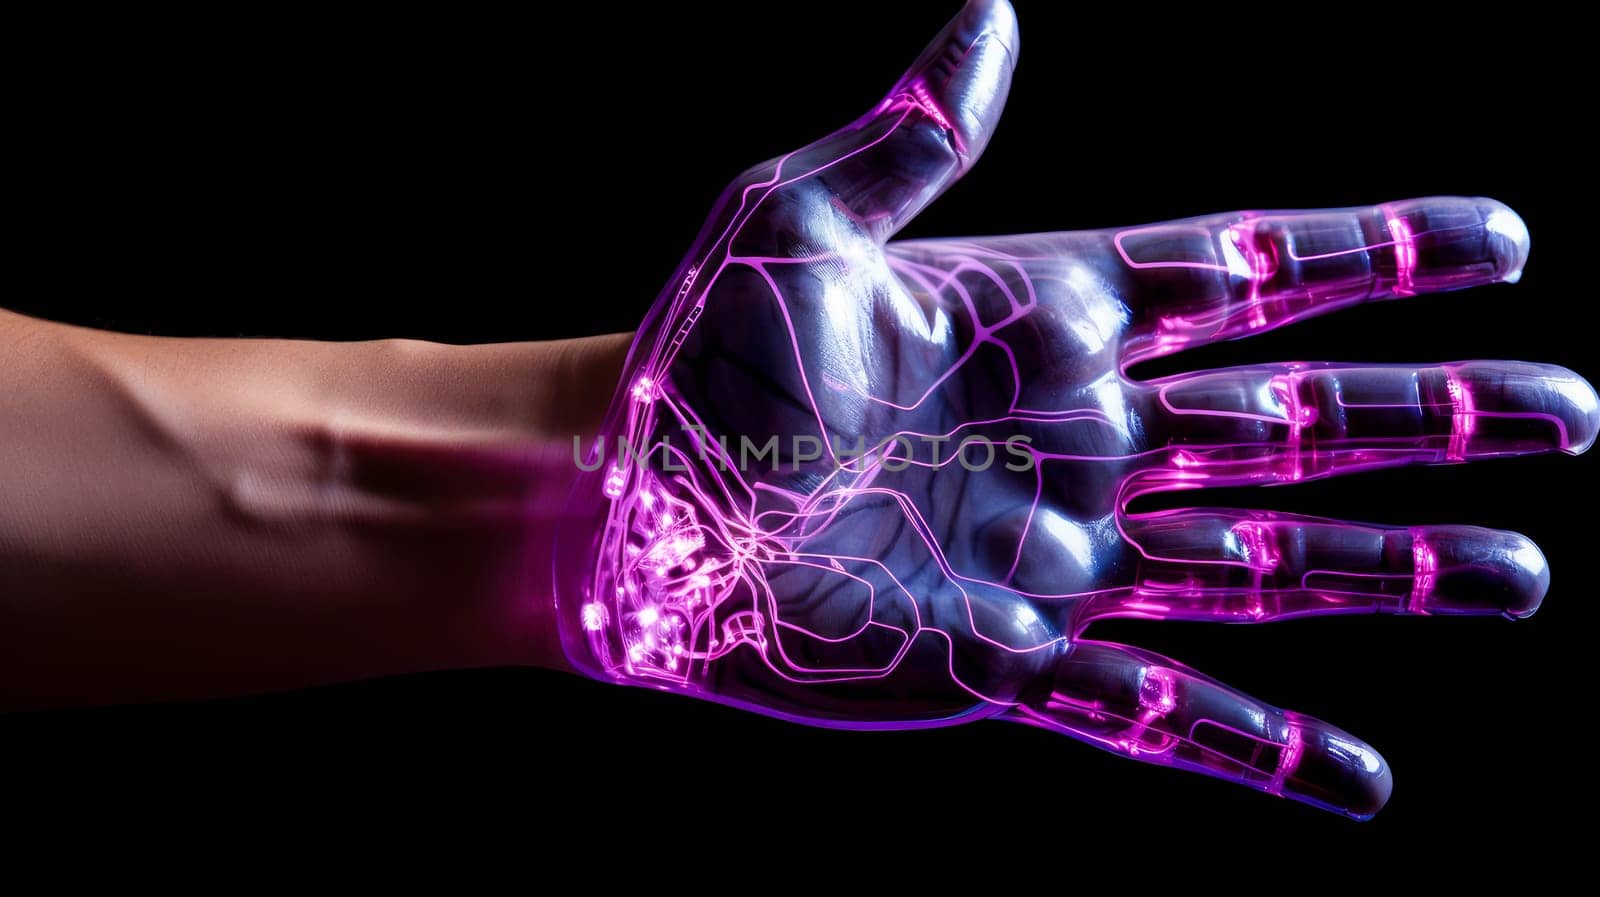 Cyborg human robot arm in futuristic style by Alla_Yurtayeva